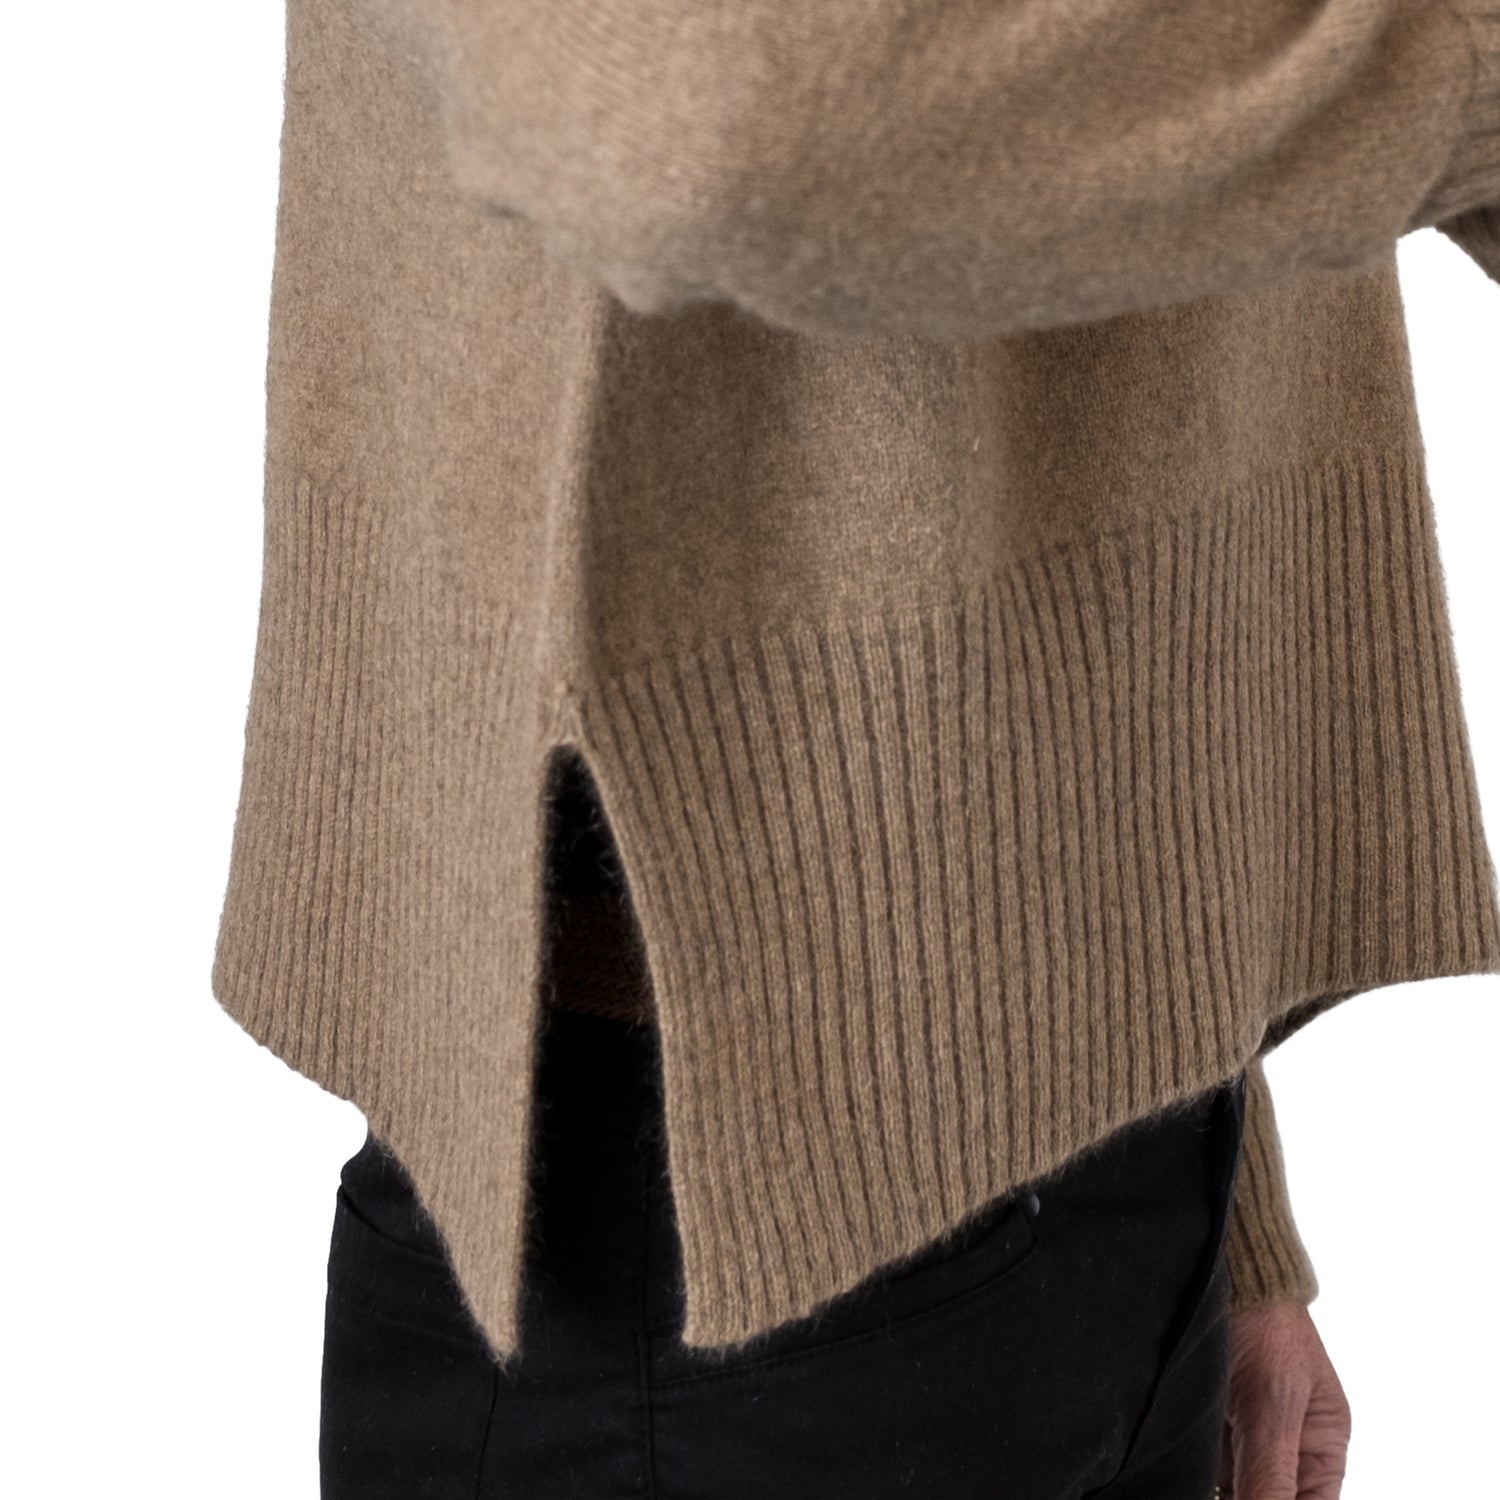 Split Hem Sweater in colour Caramel. Detail of split in Hem